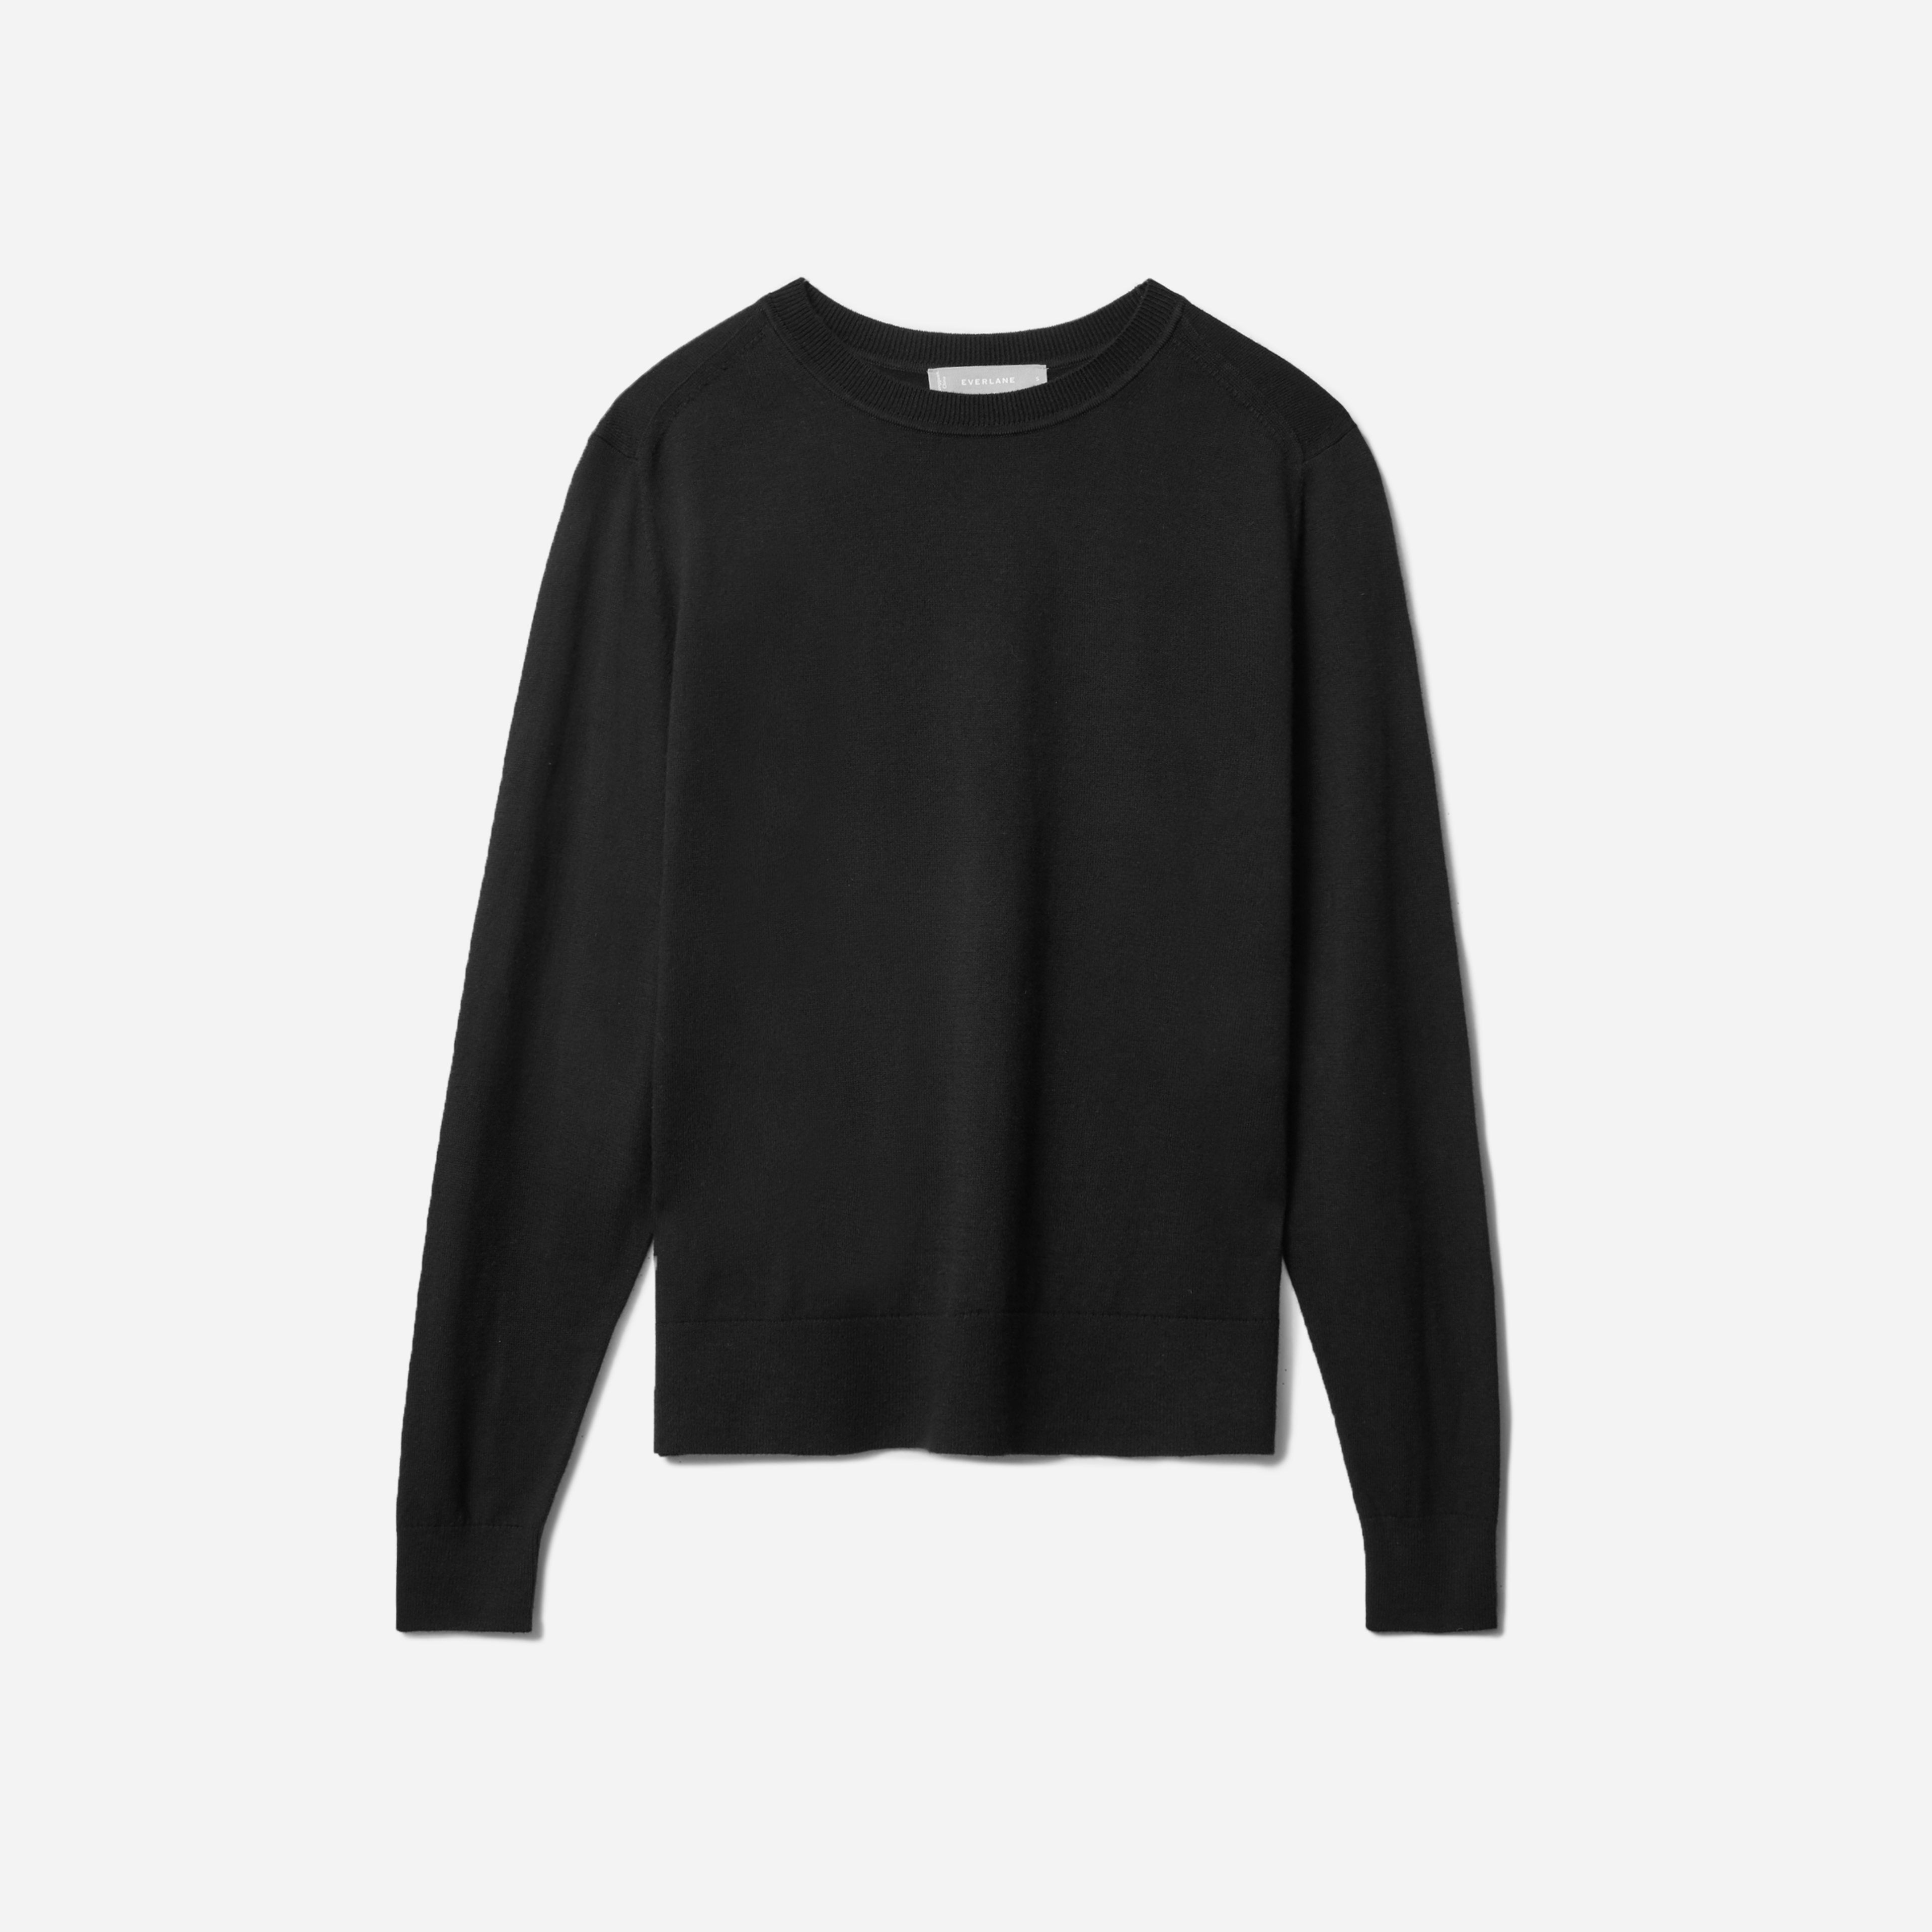 The Organic Crewneck Sweater, Black Sweater, Crewneck Sweater, Black Sweaters, Everlane Sweater | Everlane